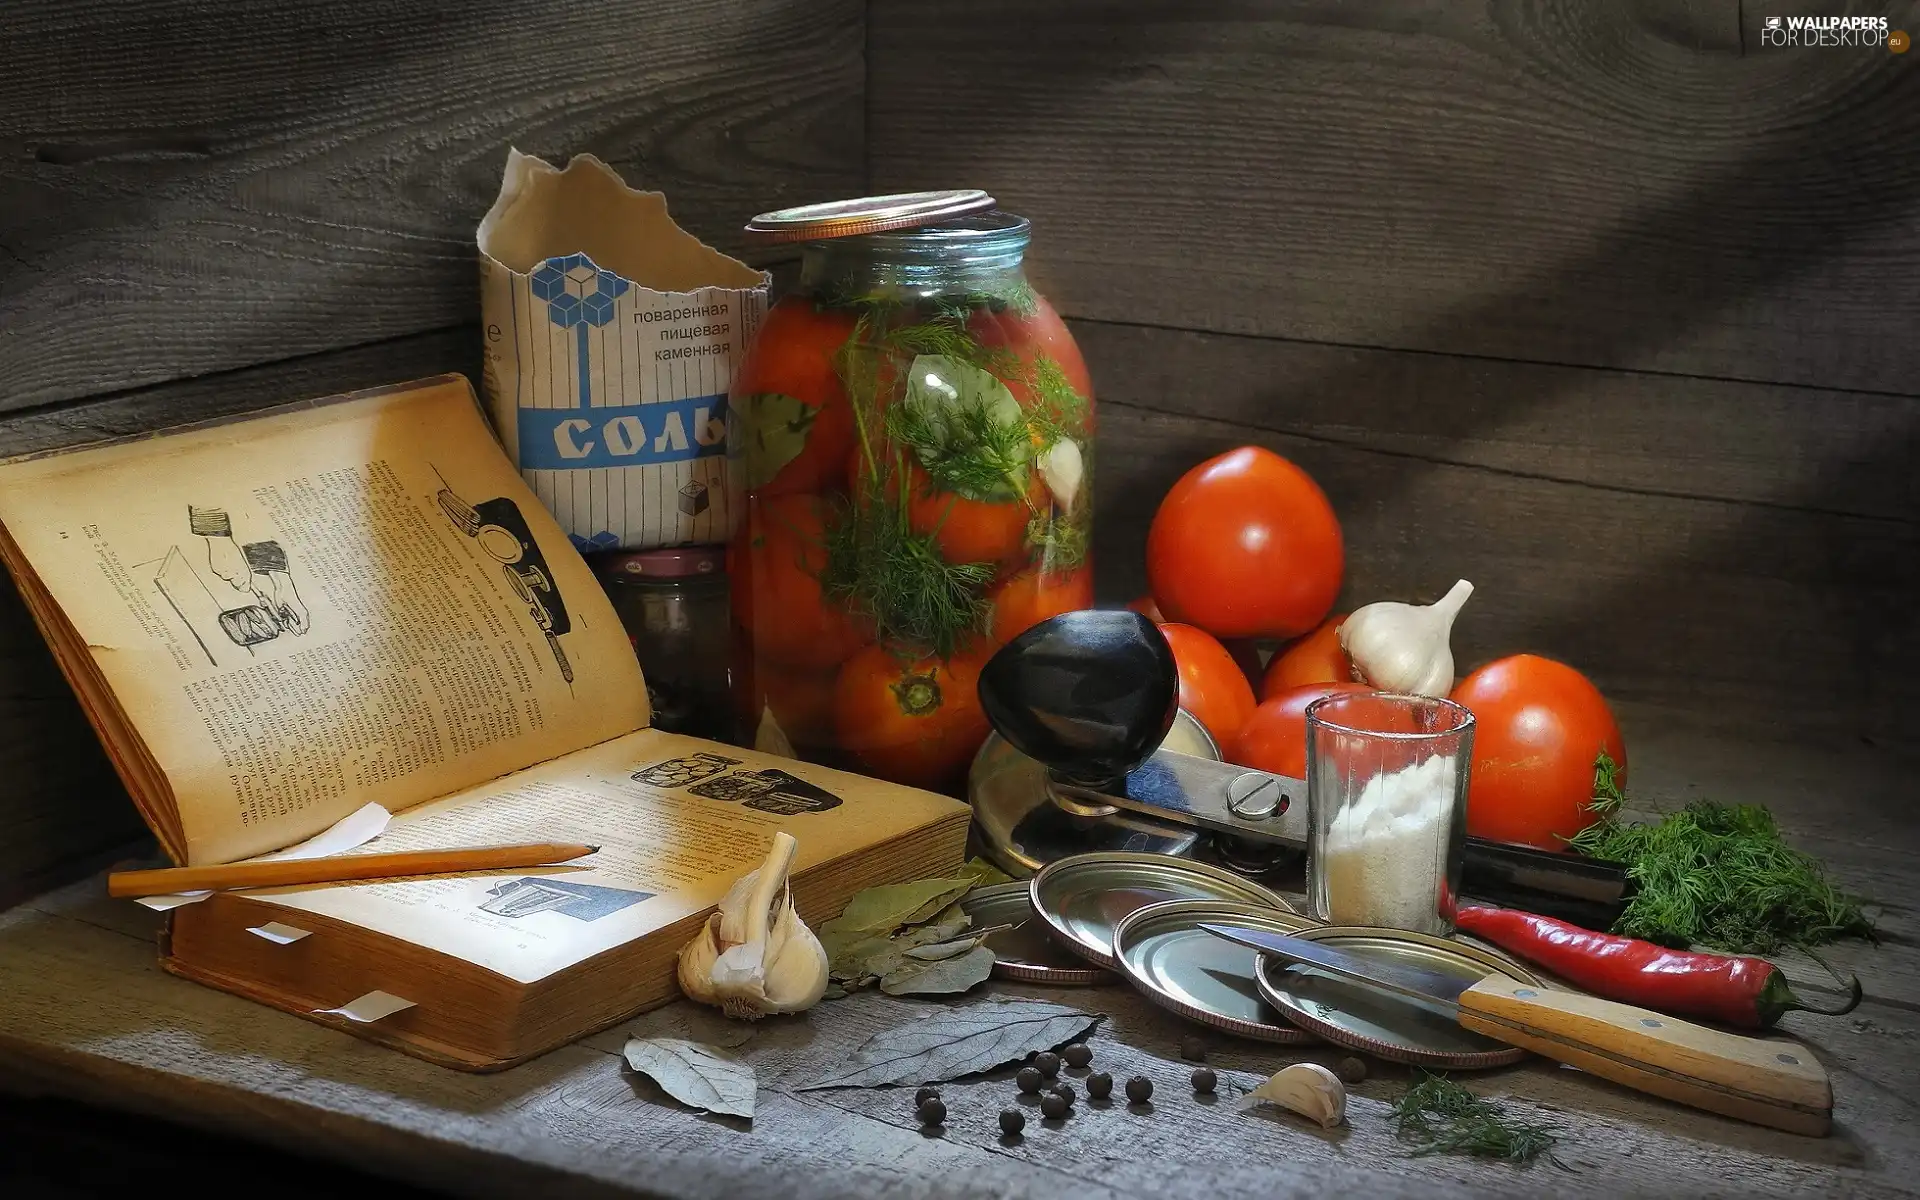 knife, garlic, dill, jar, Book, tomatoes, pepper, Preparations, spice, pencil